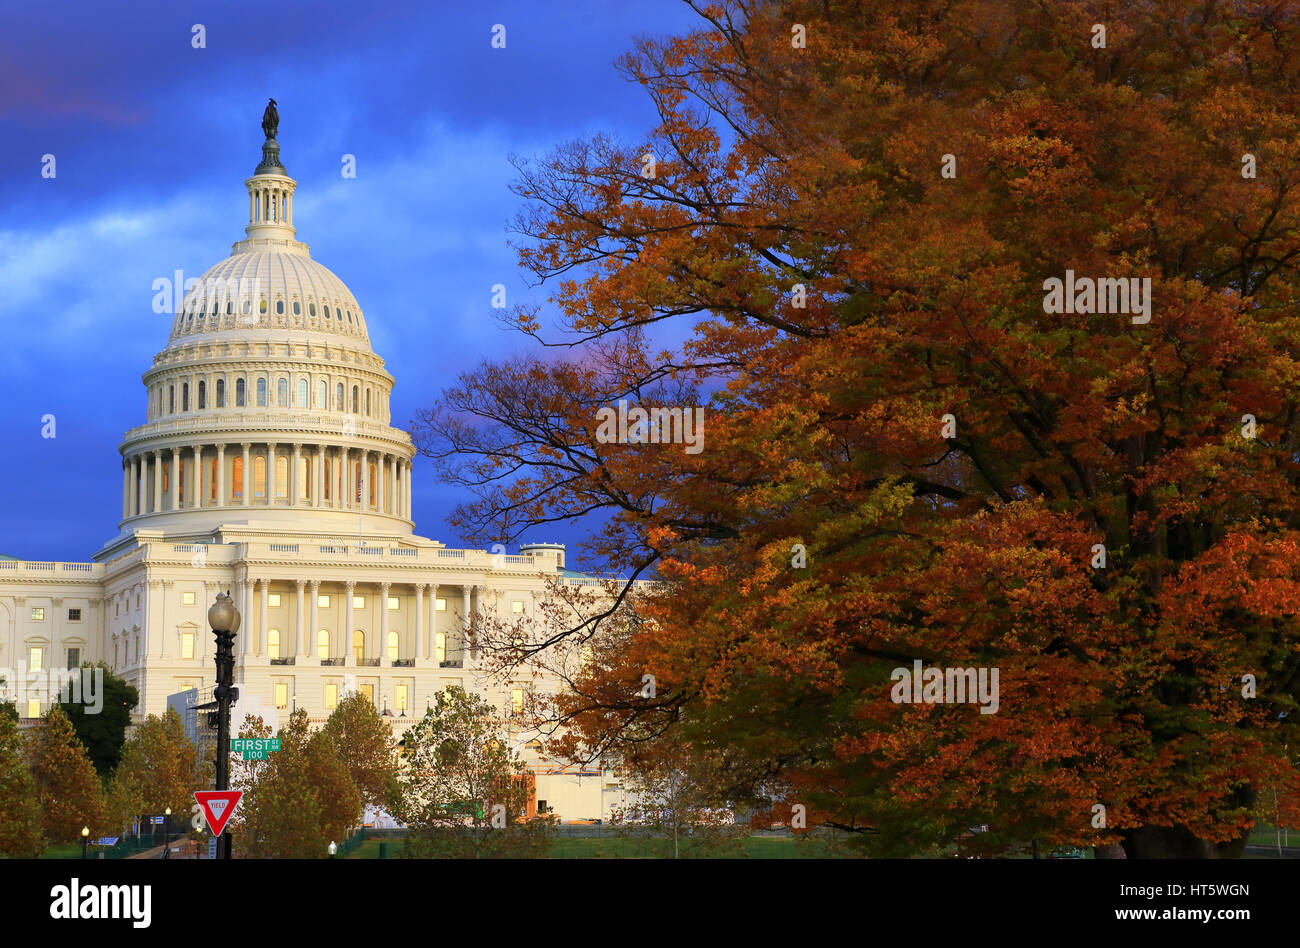 US Capitol Gebäude mit Baum im Herbst Farbe in Capitol Hill. Washington DC. USA Stockfoto